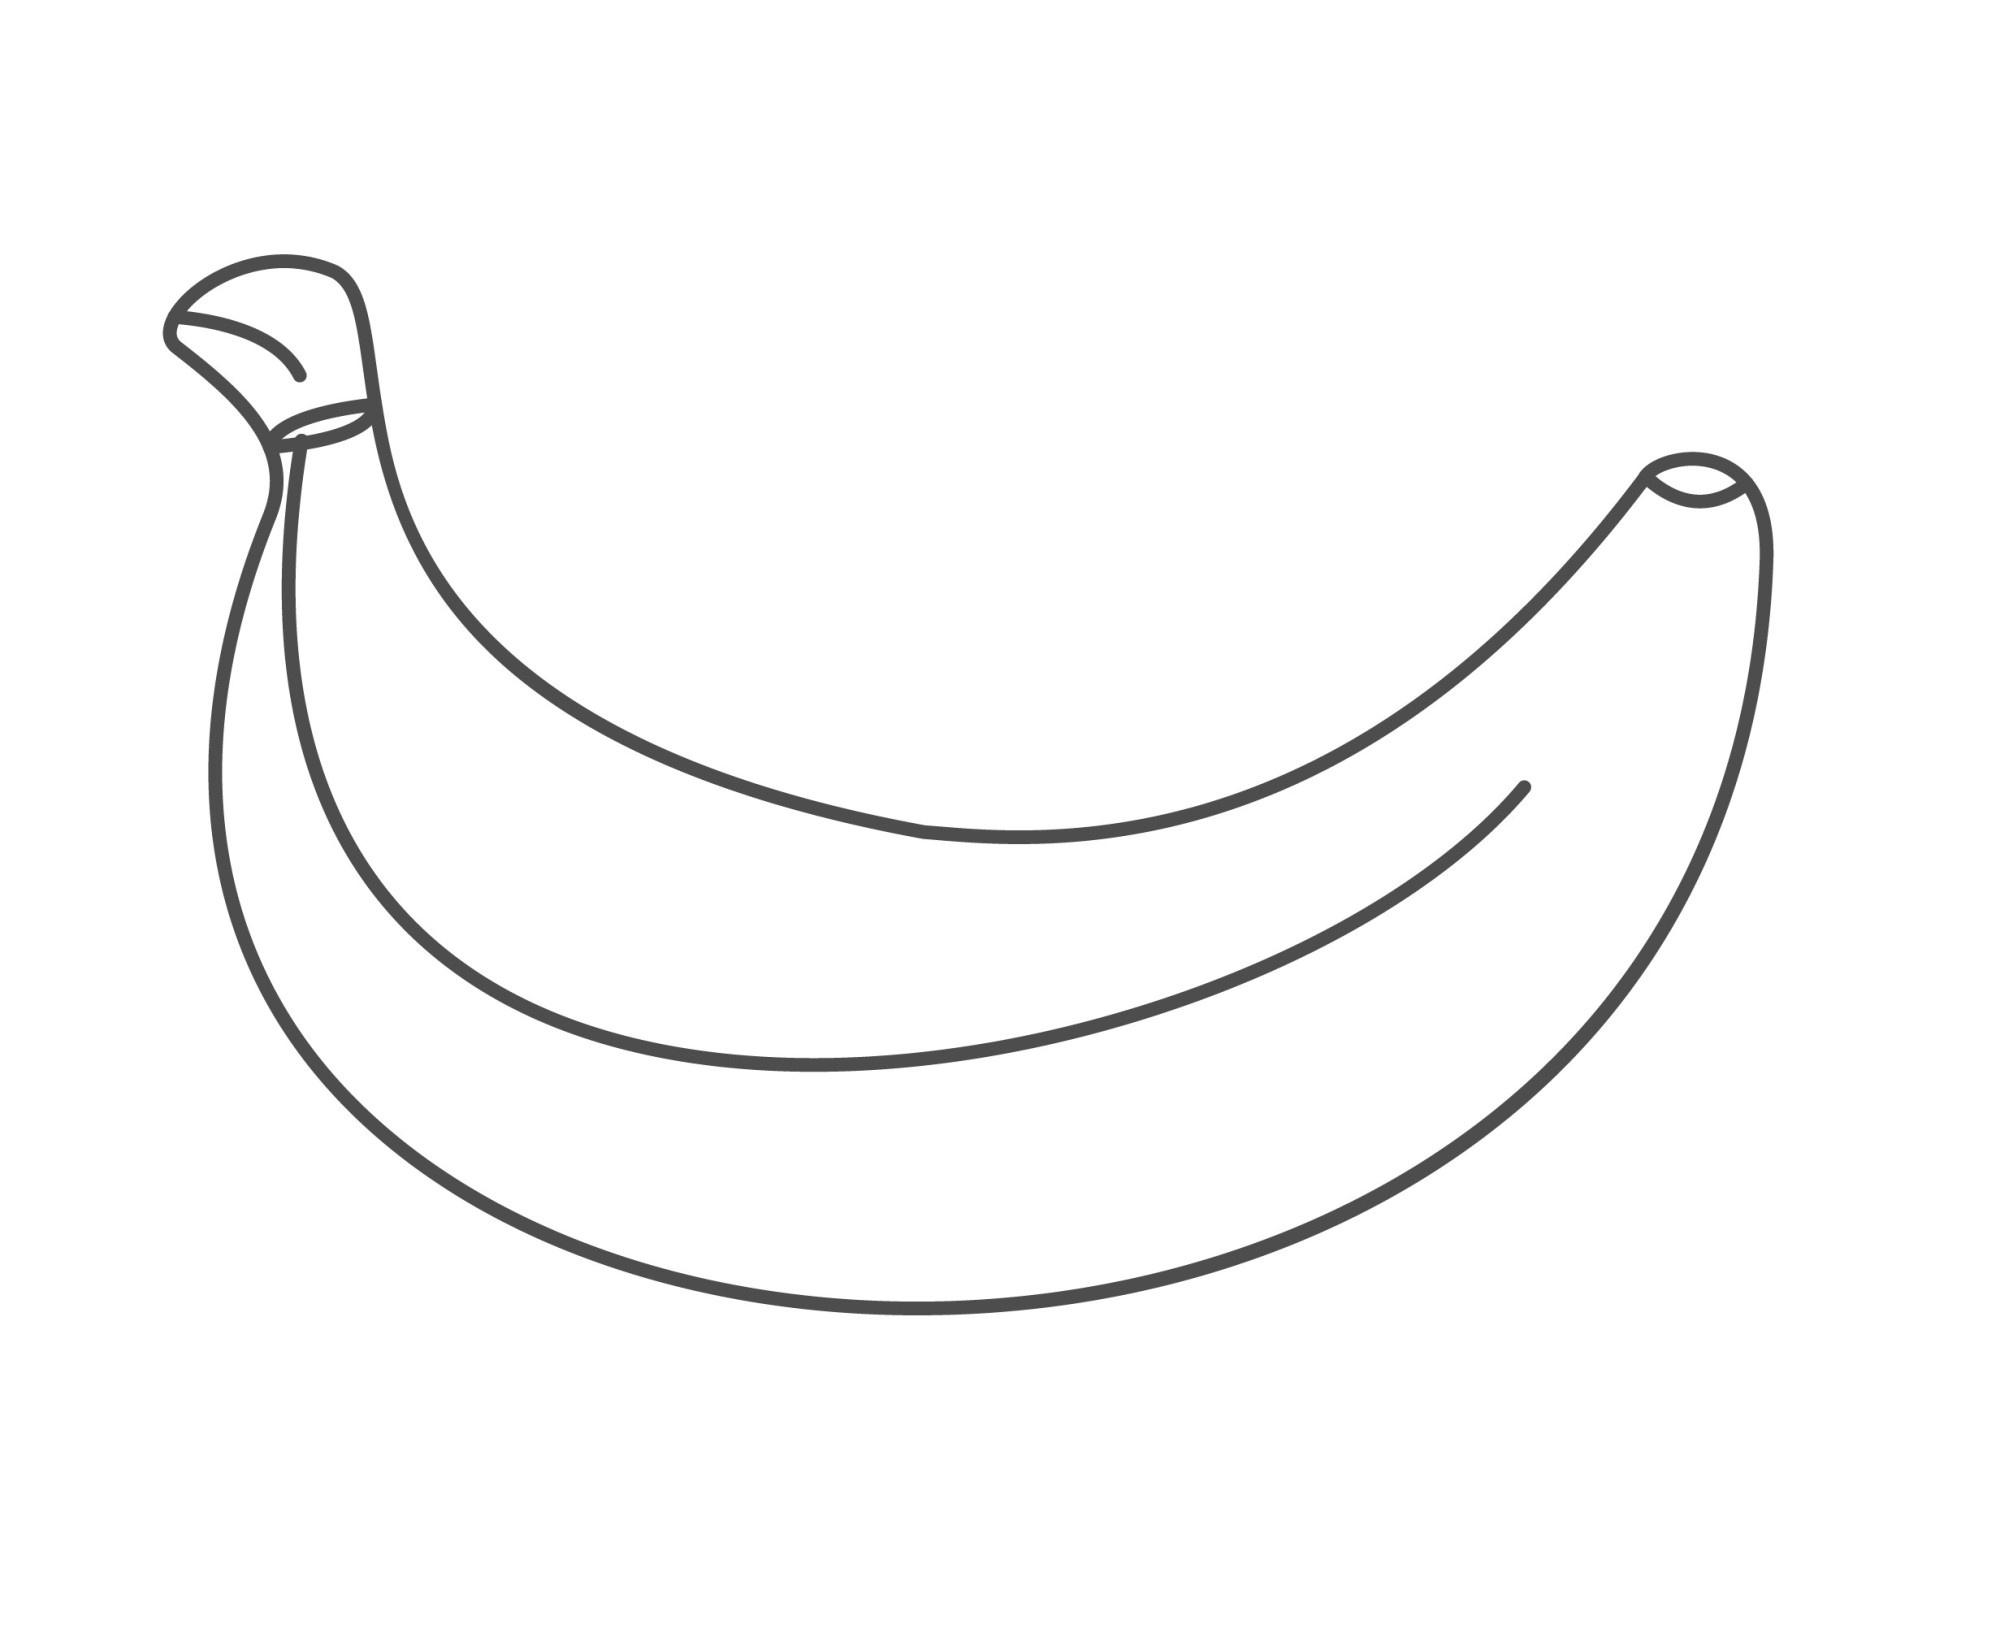 Раскраска для детей: желтый банан